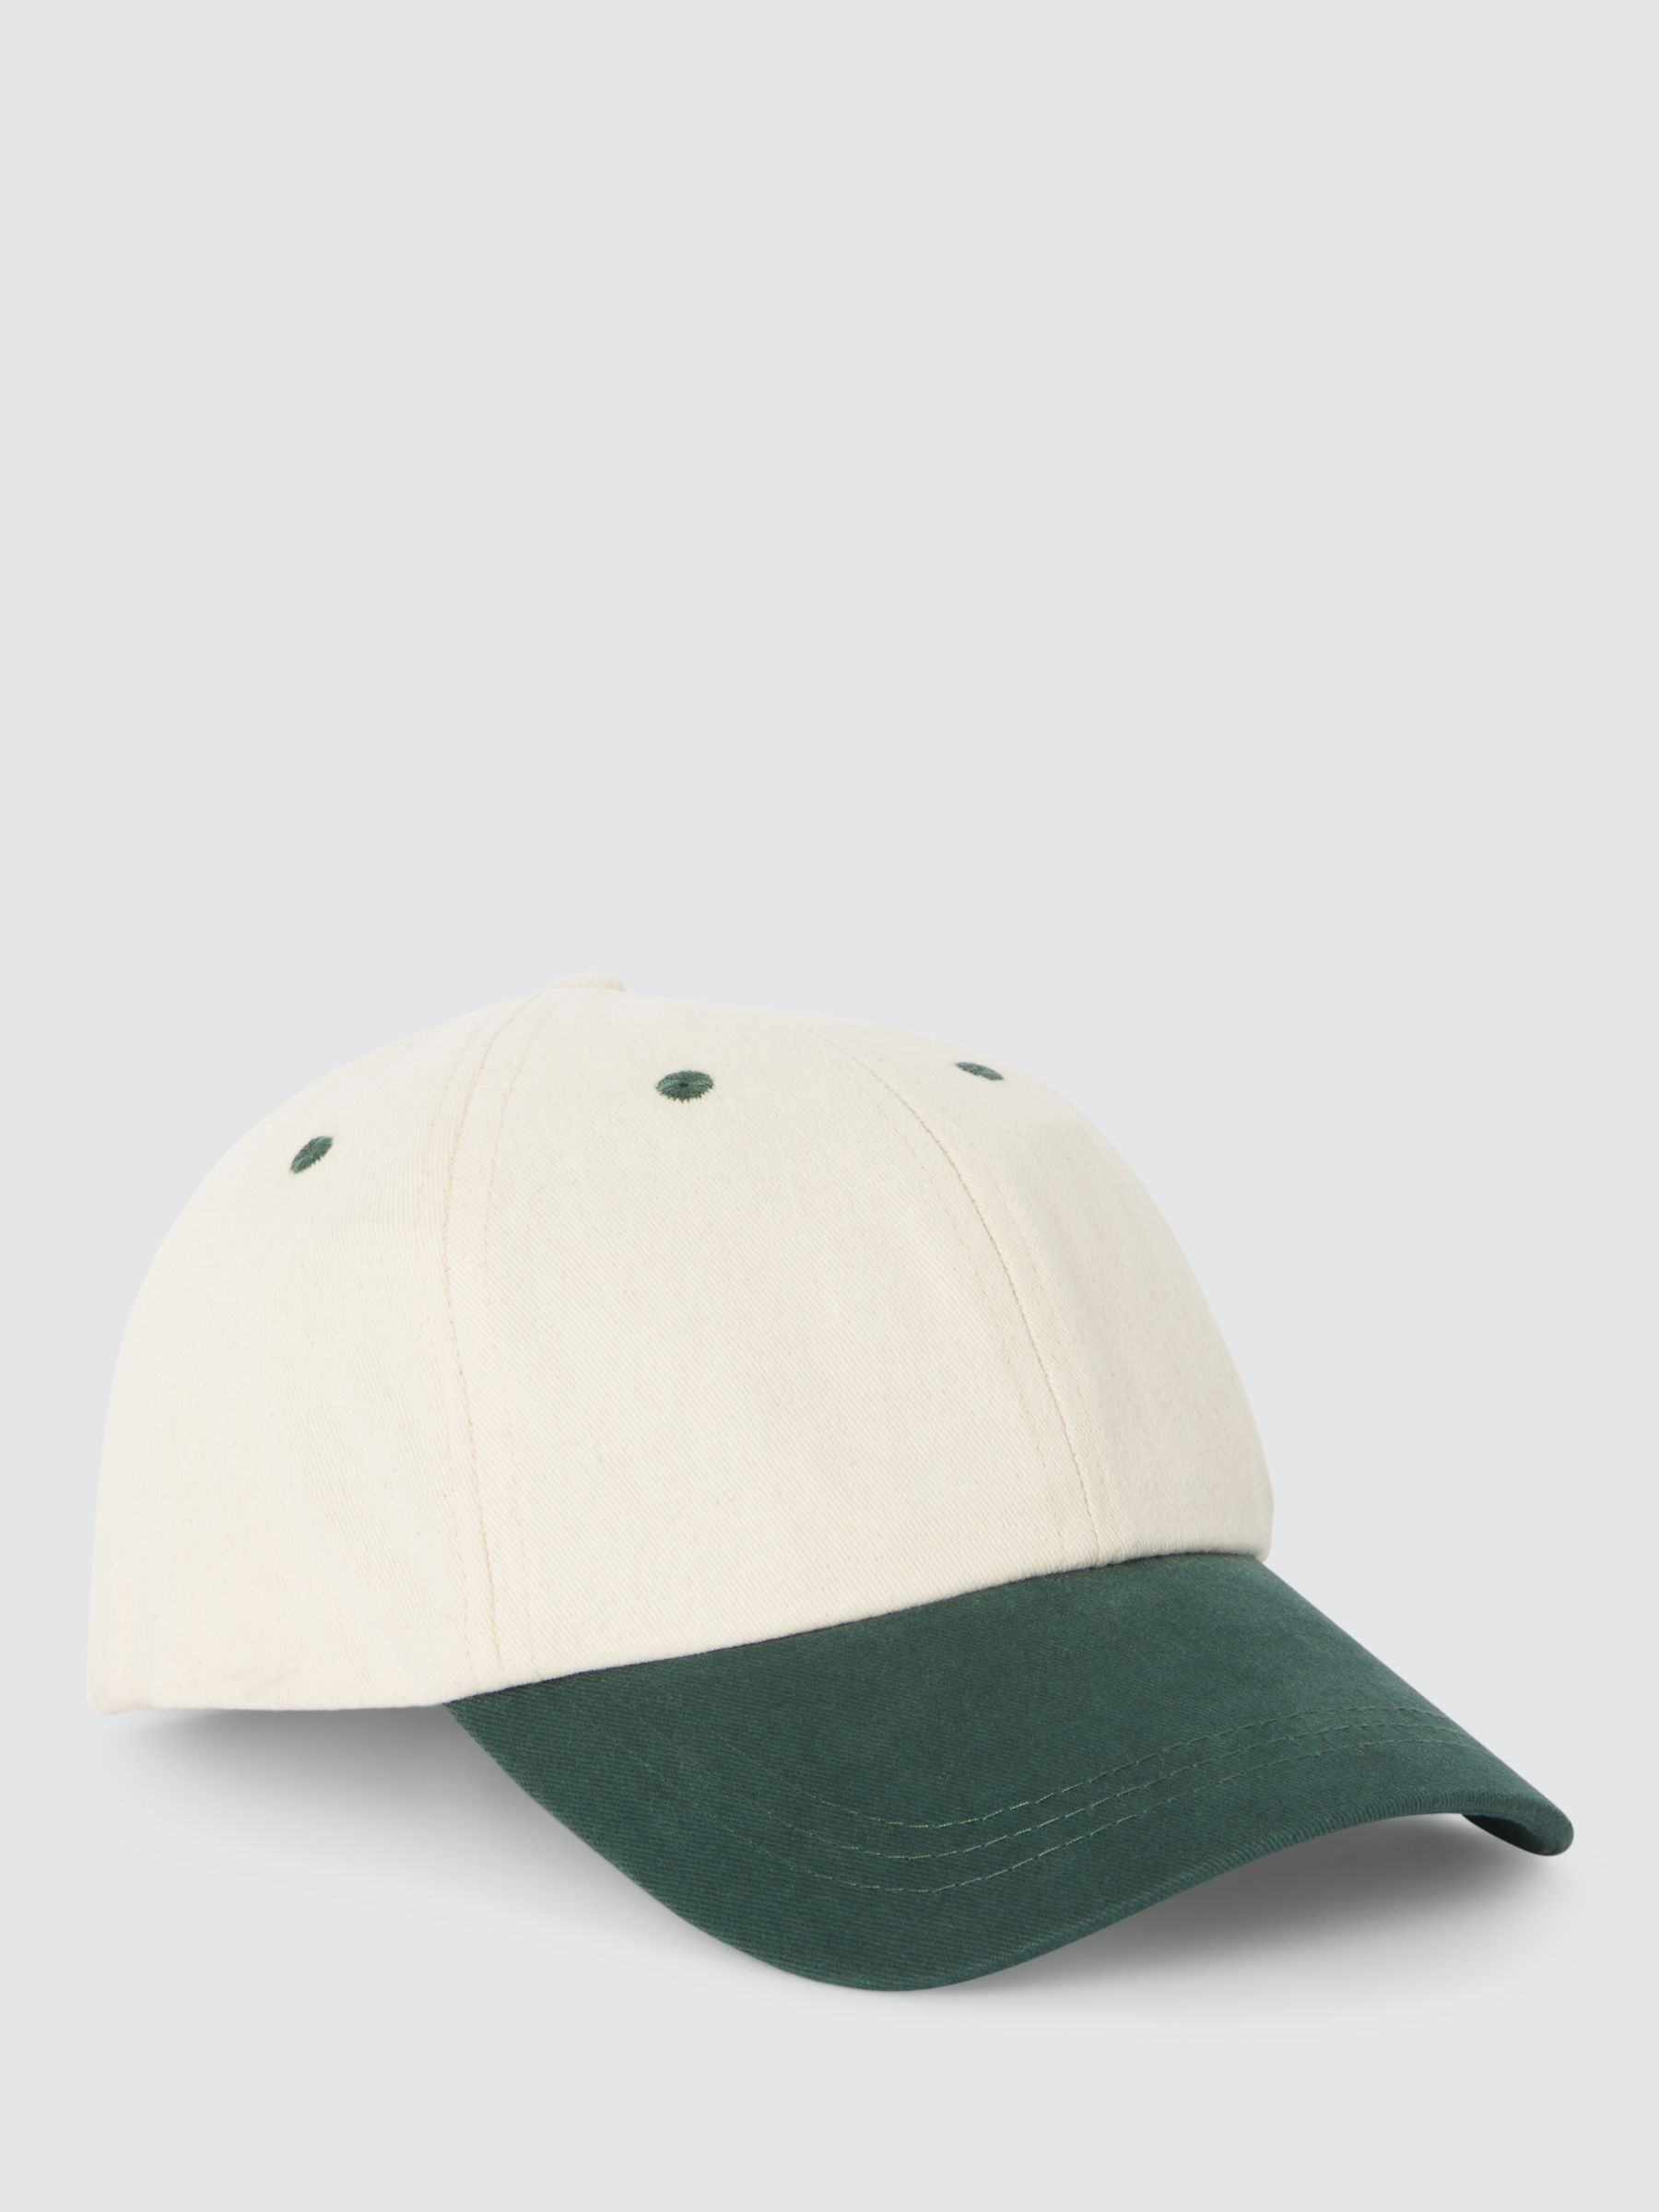 John Lewis ANYDAY Contrast Peak Baseball Cap, Green/White